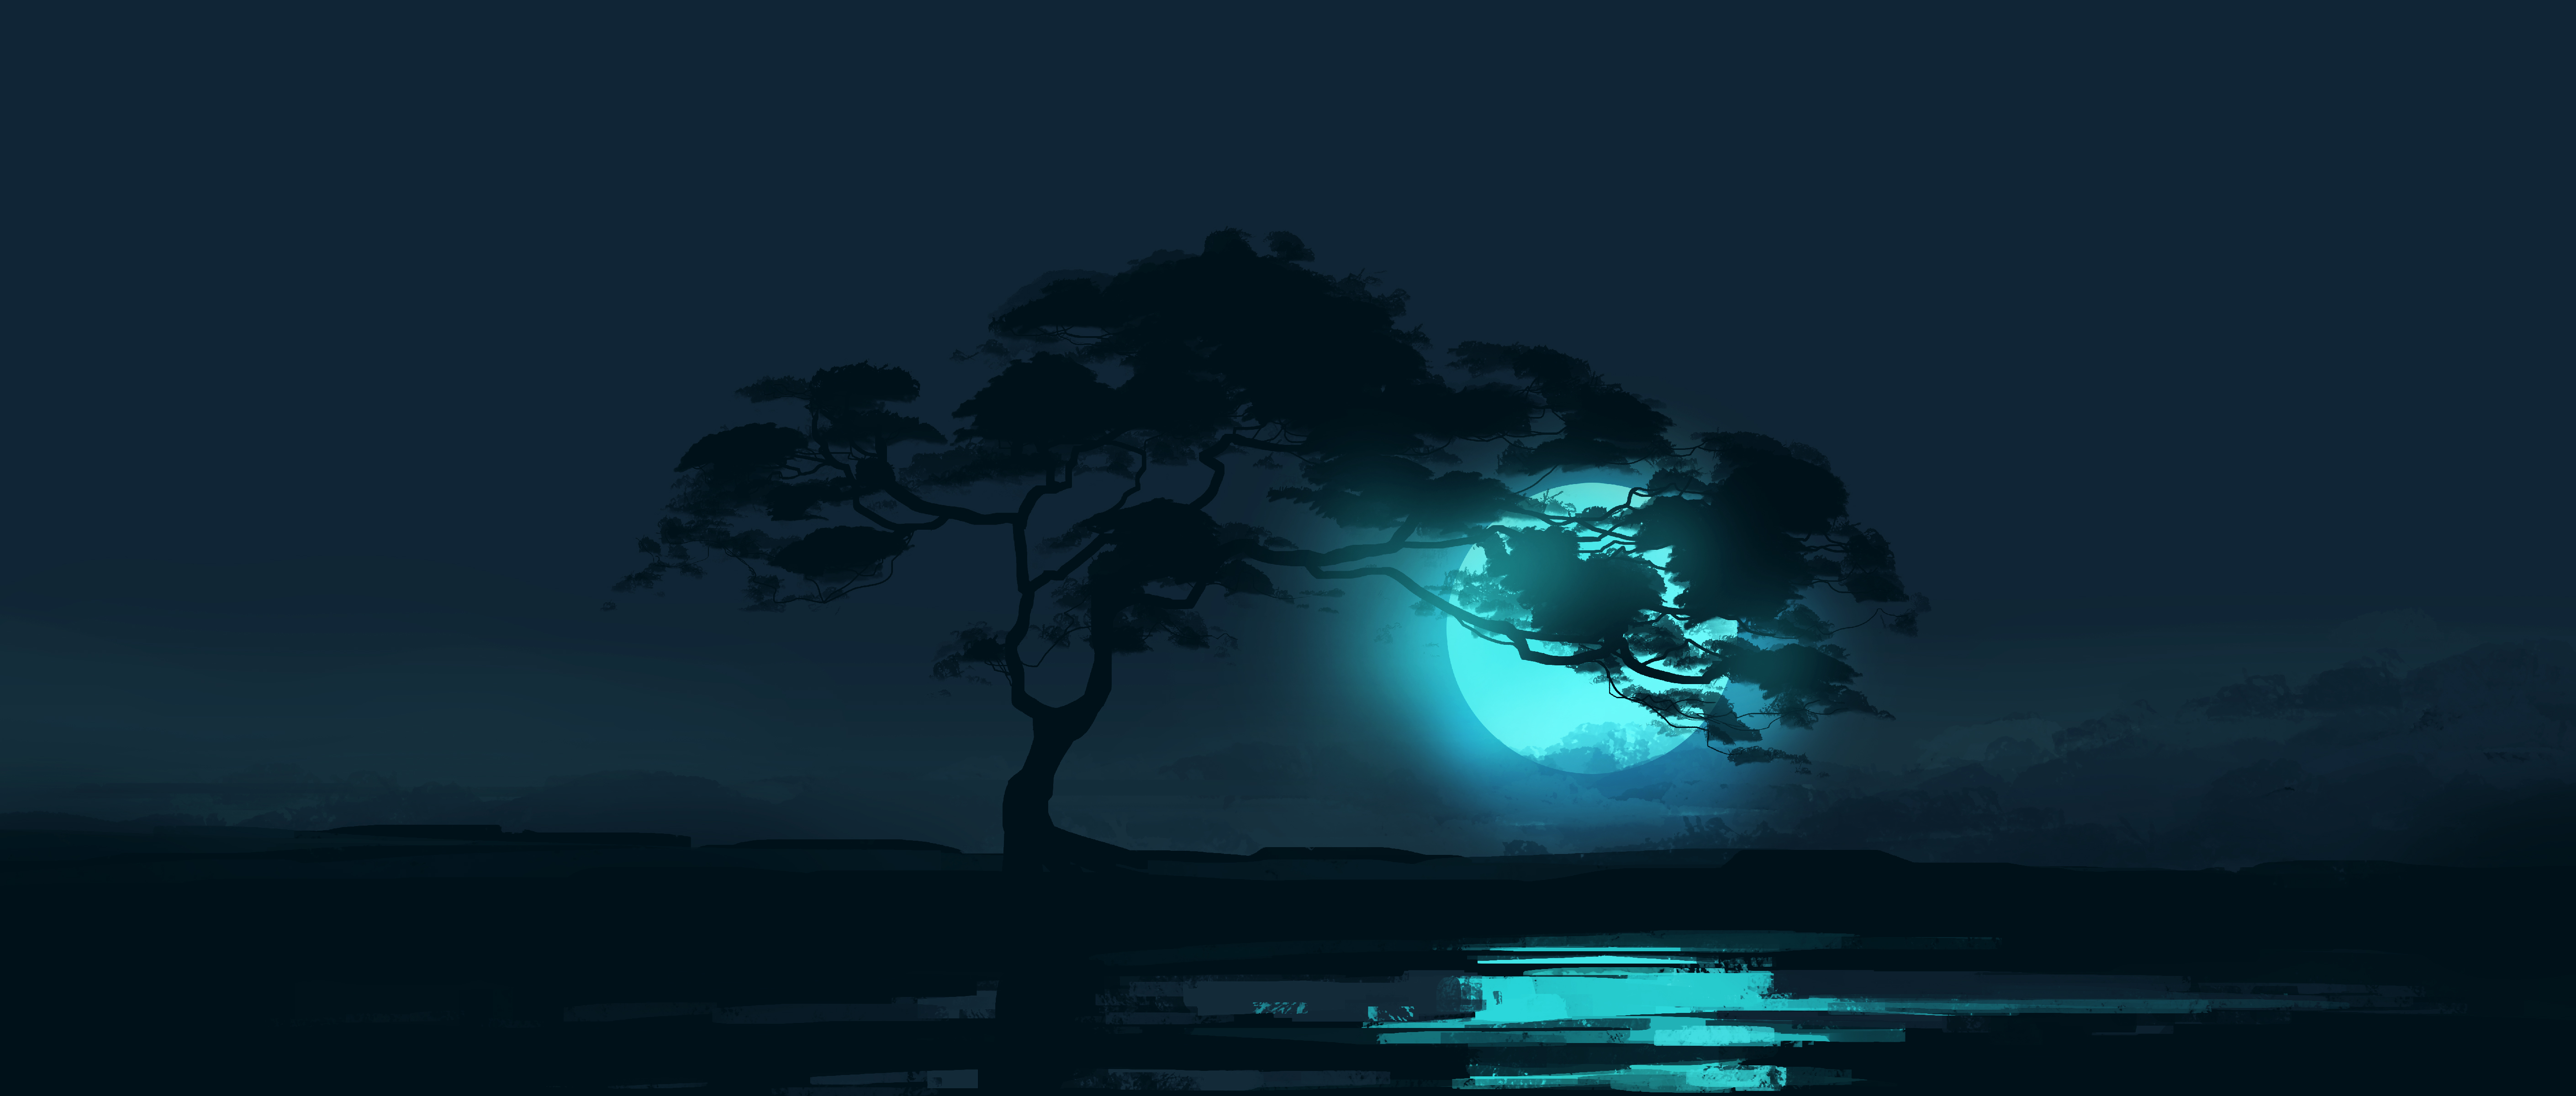 Gracile Digital Art Artwork Illustration Environment Wide Screen Ultrawide Trees Landscape Night Moo 5640x2400